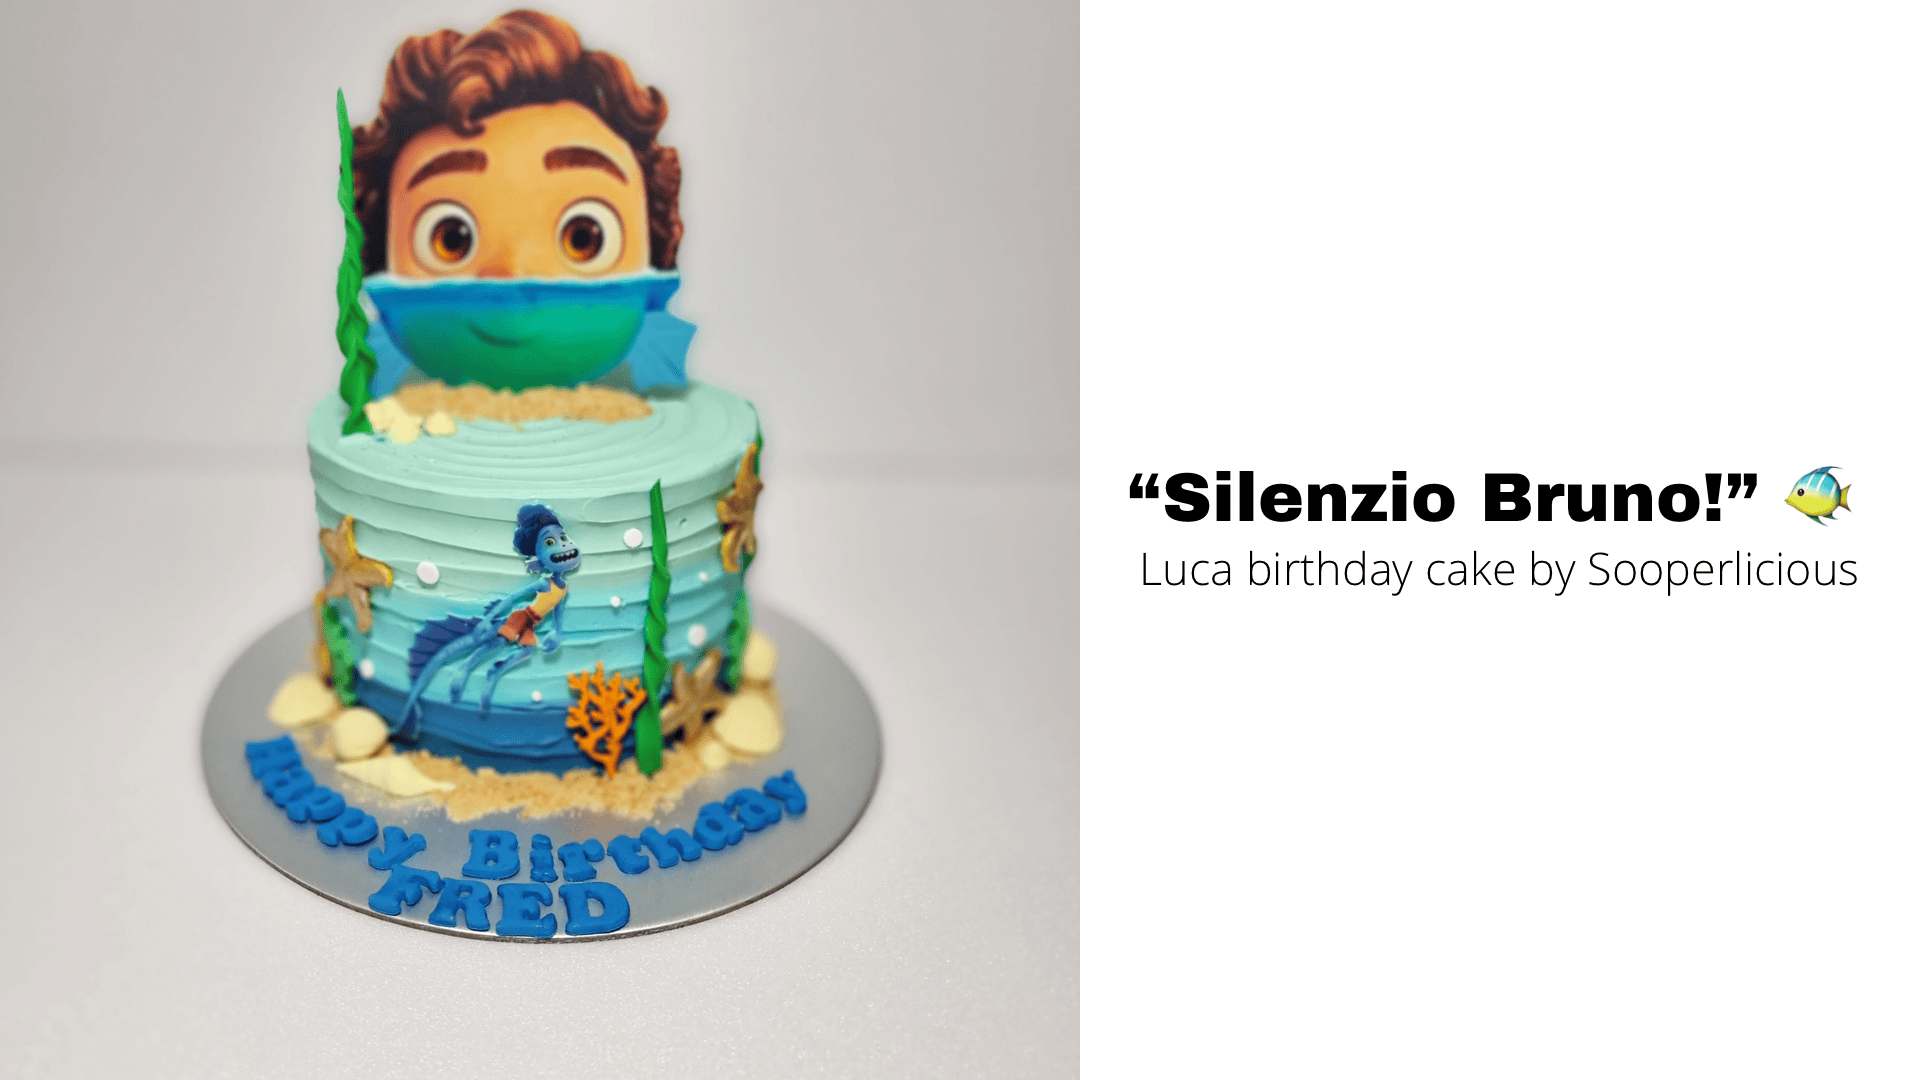 Silenzio Bruno!” 🐠 — Luca birthday cake by Sooperlicious - Sooperlicious  Cakes